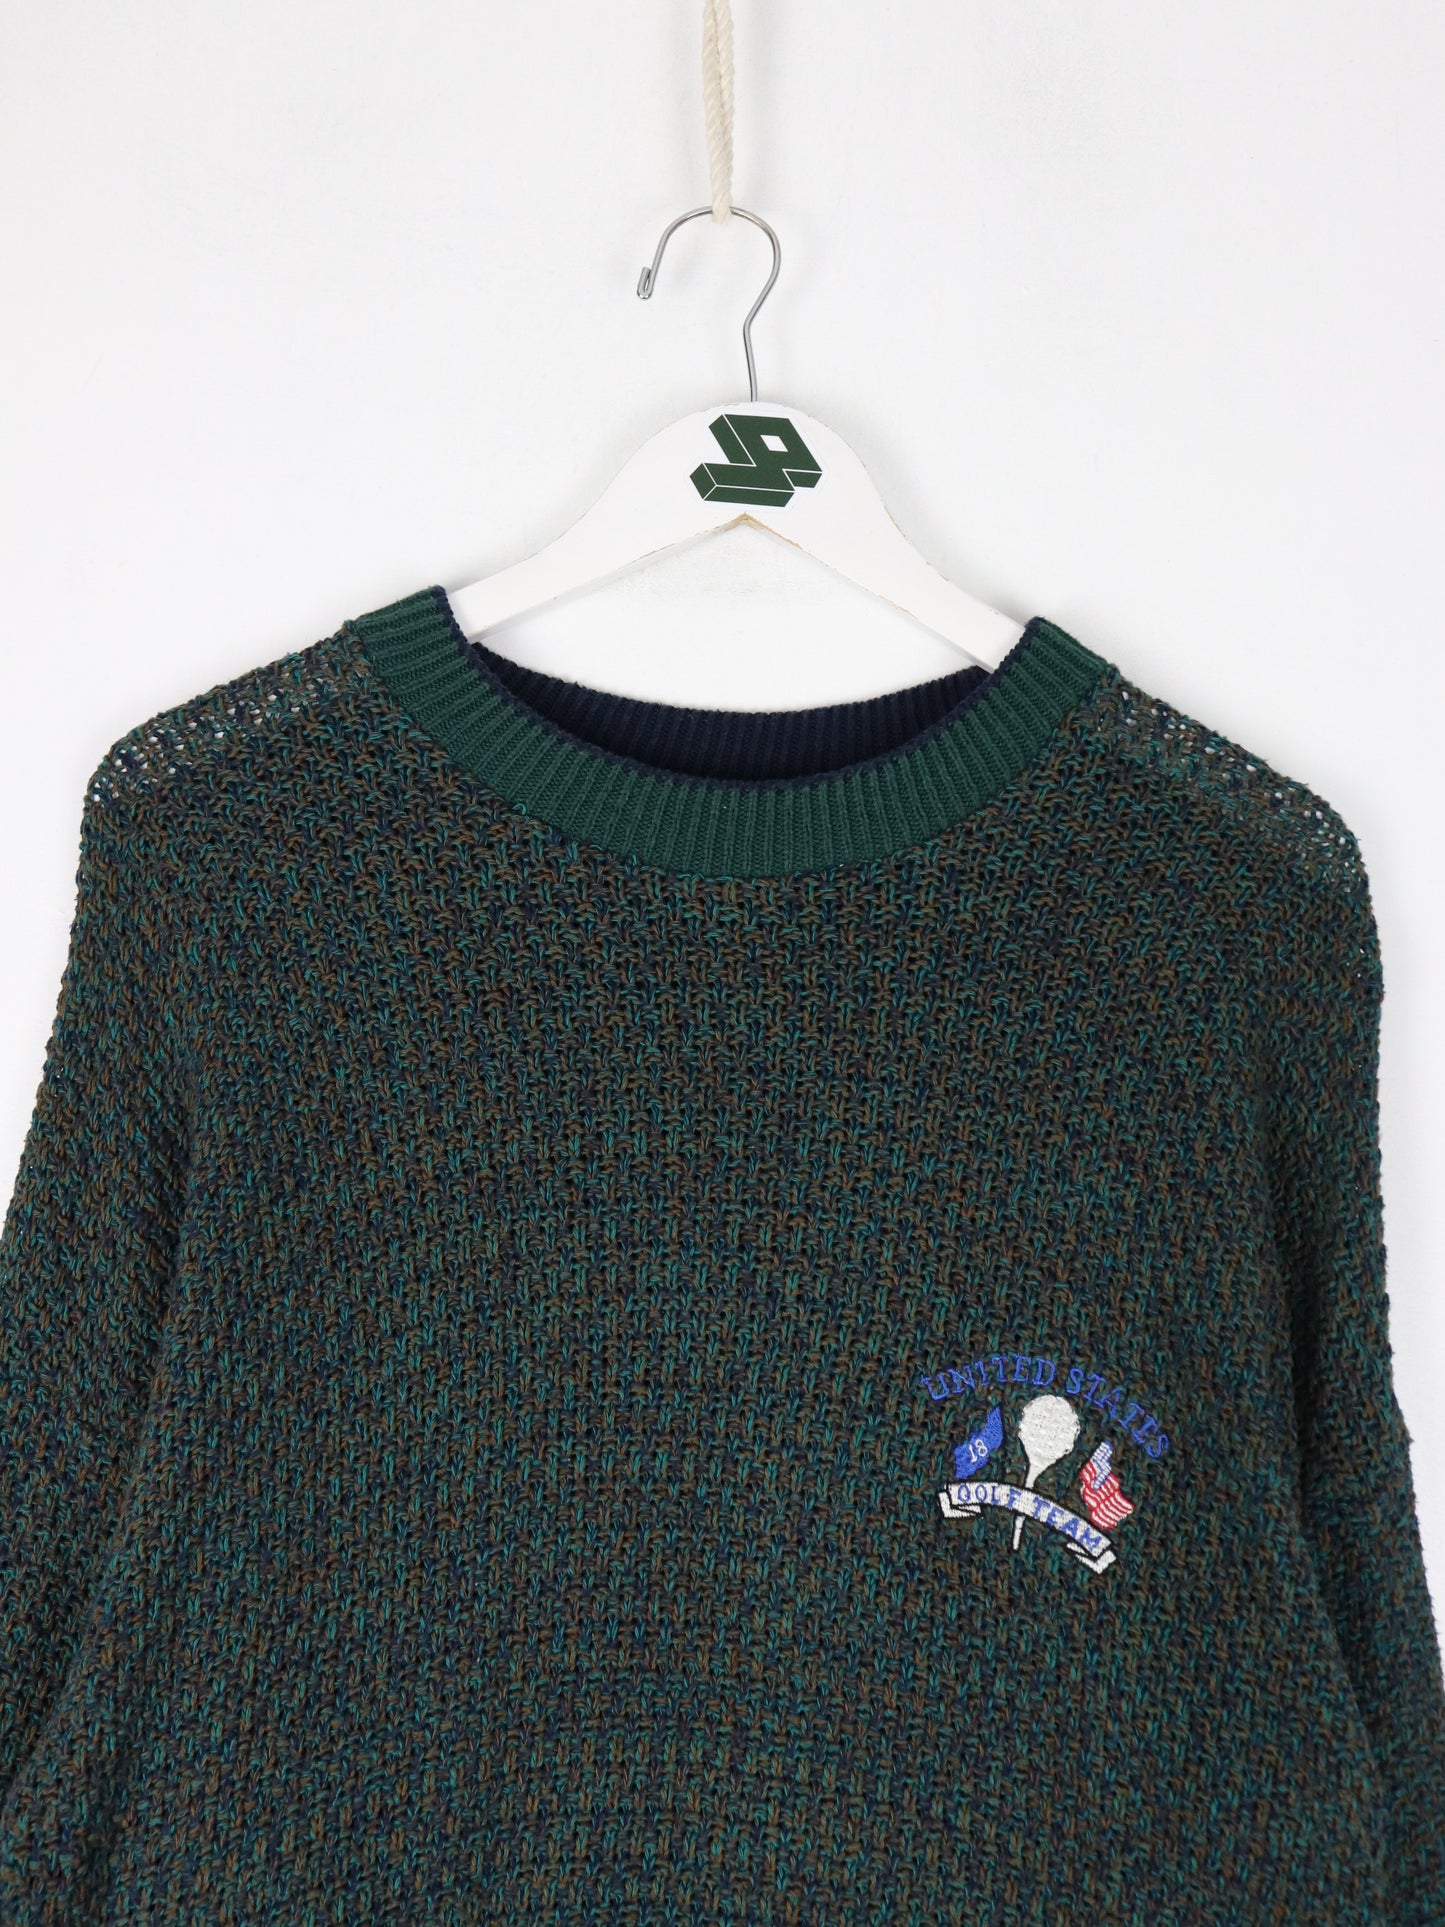 Vintage United States Golf Team Sweater Mens Medium Green Knit